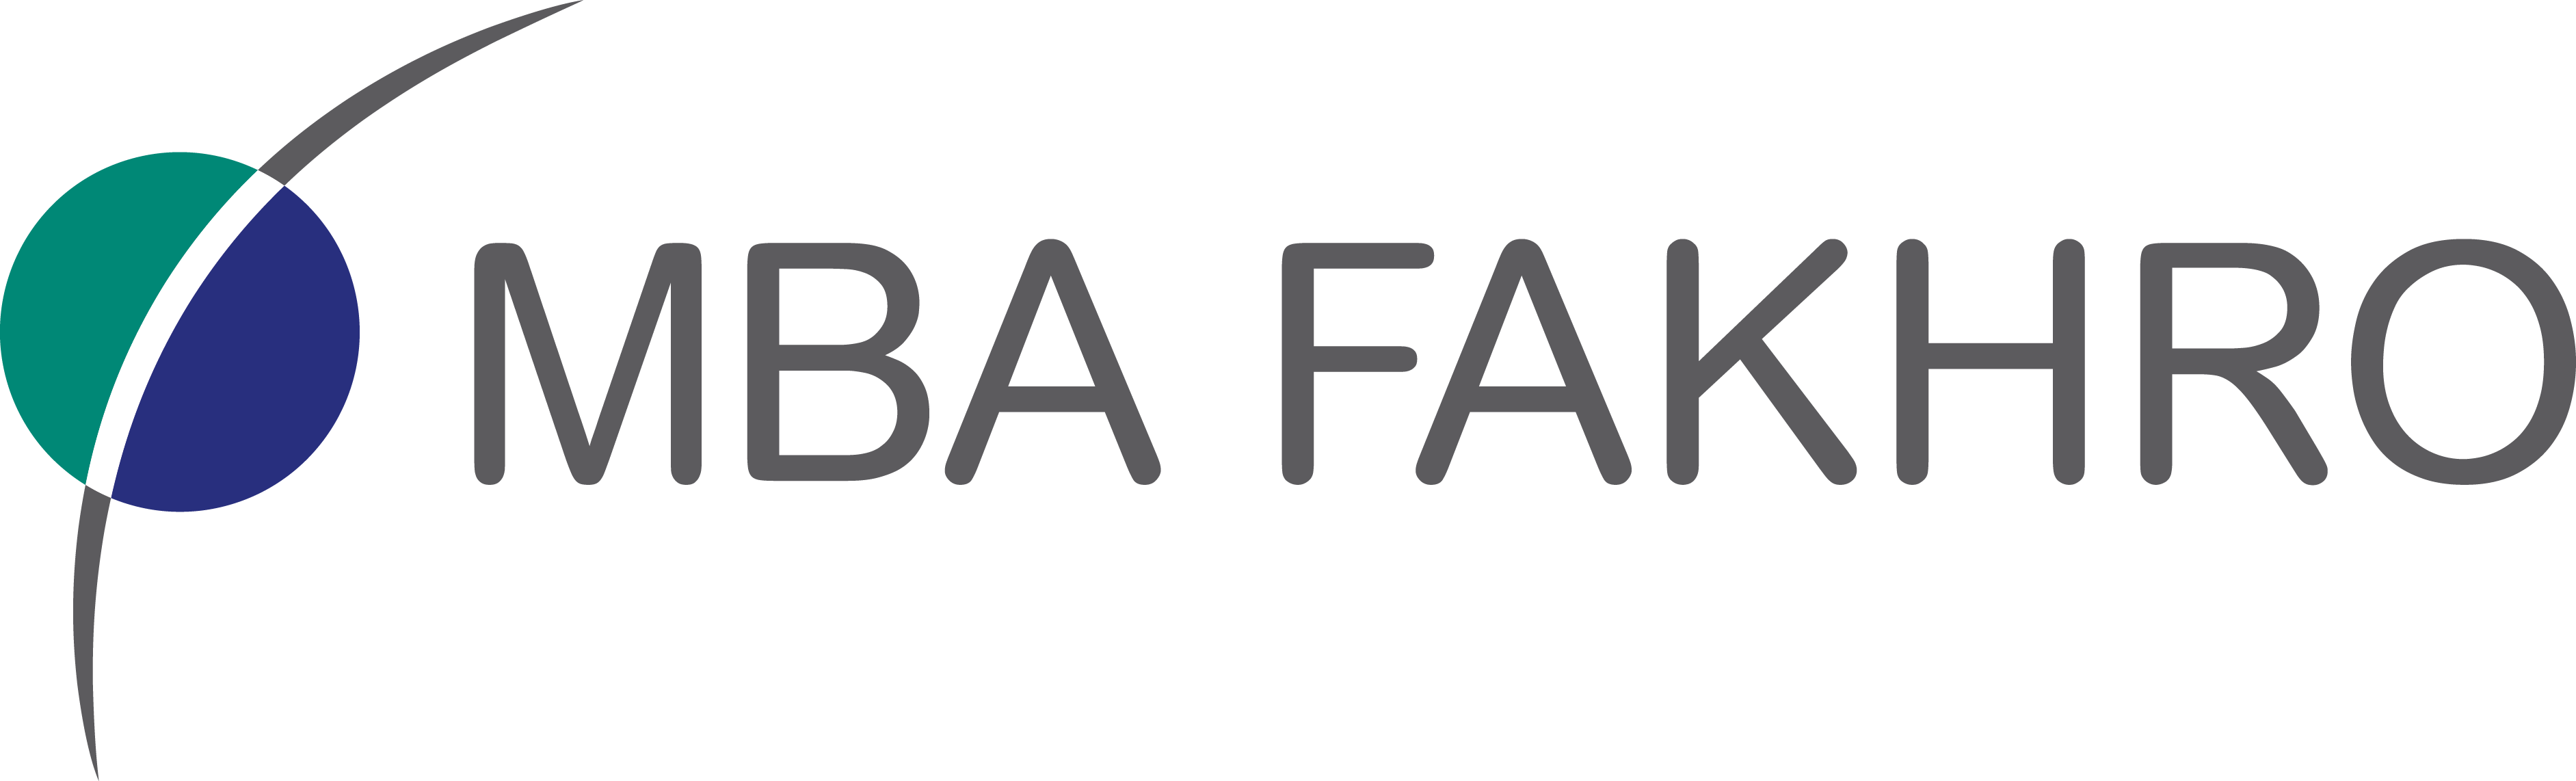 MBA Fakhro Venture Capital